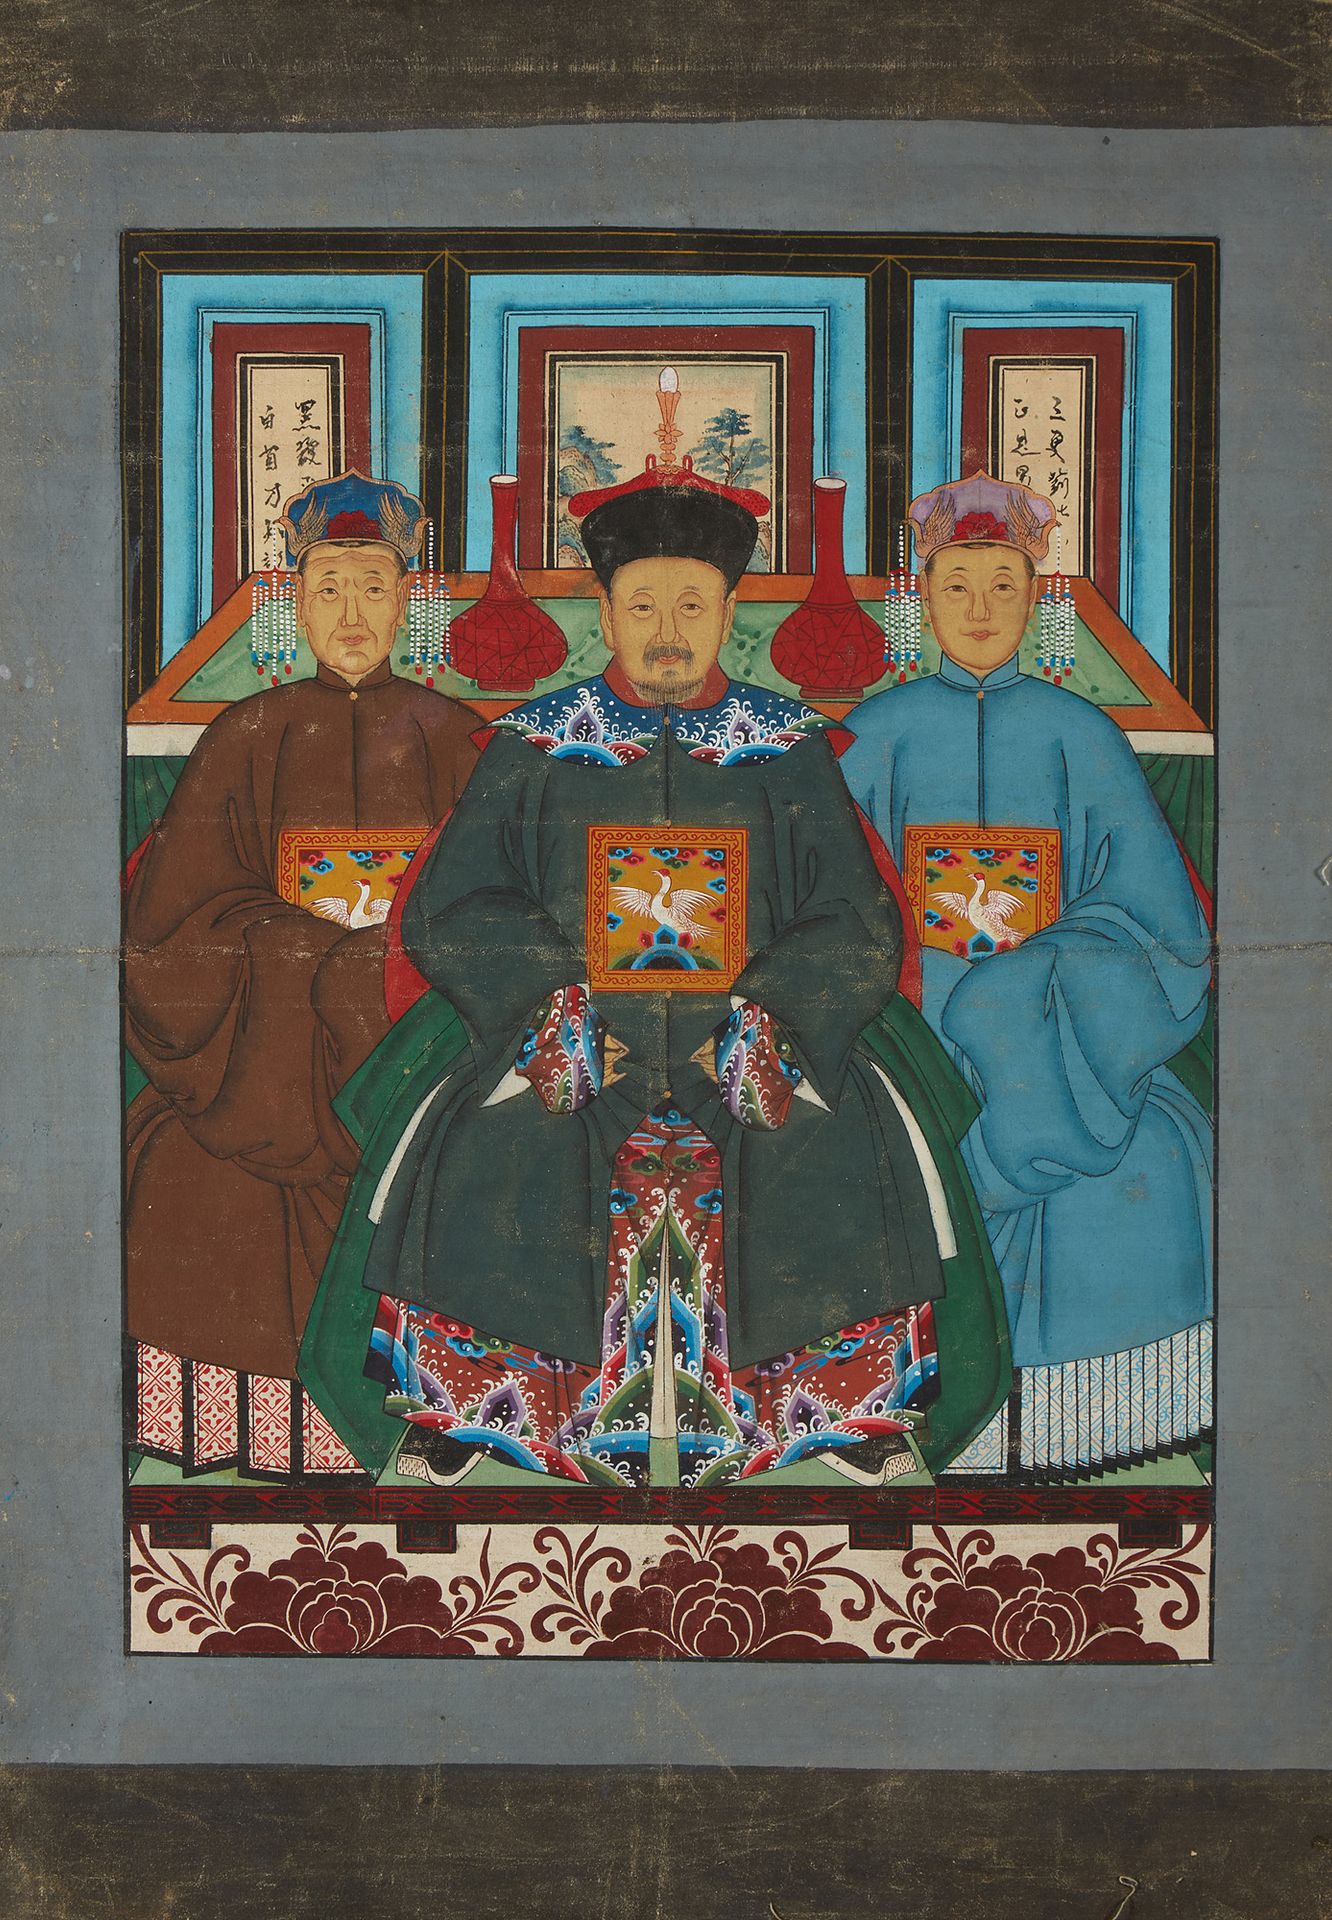 CHINE 三位政要的肖像。
布面绘画。
Dim. 80 x 67cm